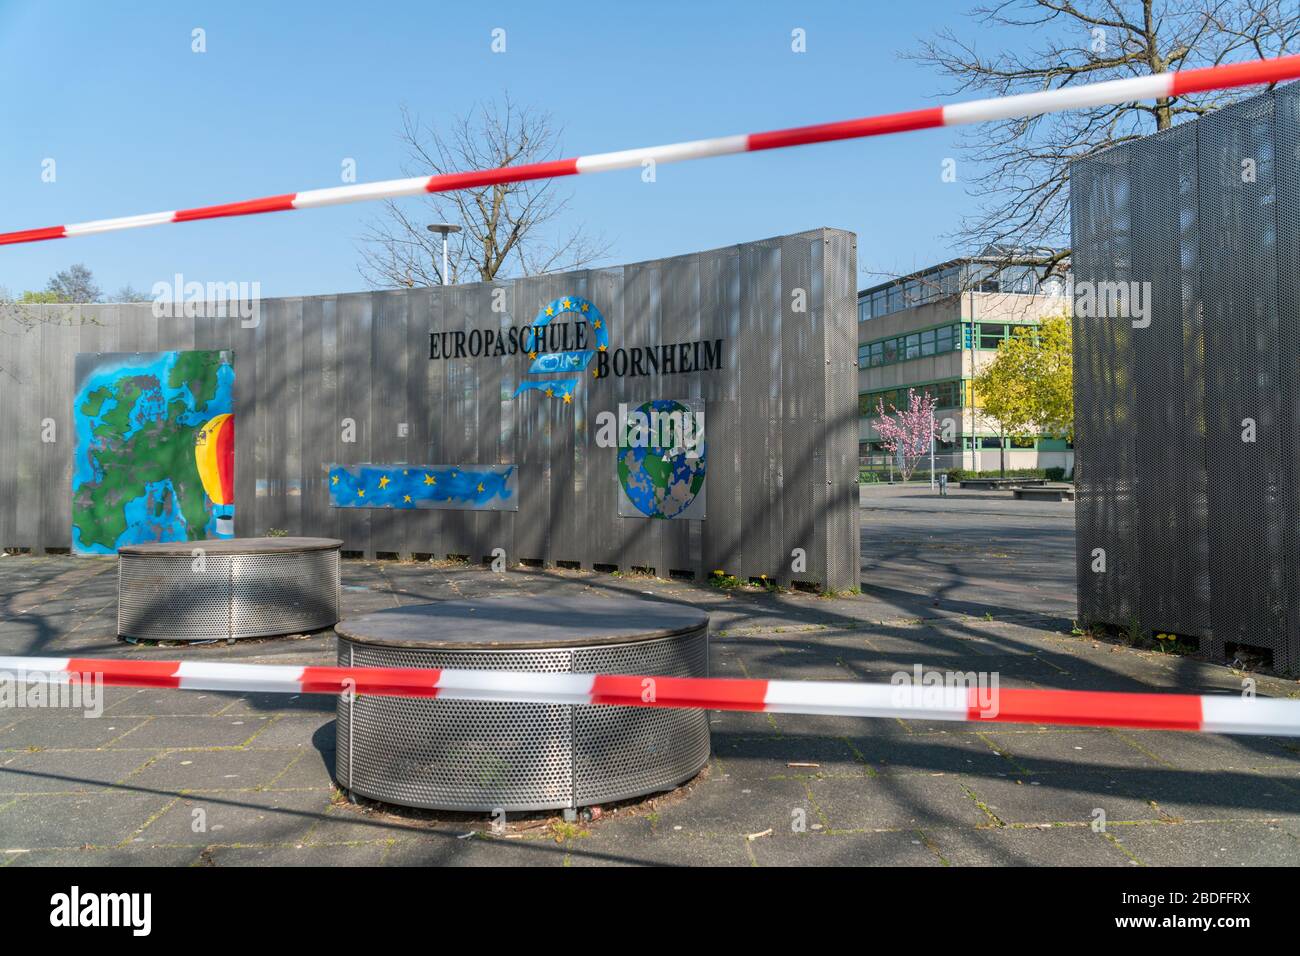 Bornheim, North Rhine-Westphalia, Germany - April 7, 2020: Local European School (Europaschule) closed due to global corona virus, COVID-19 pandemic. Stock Photo